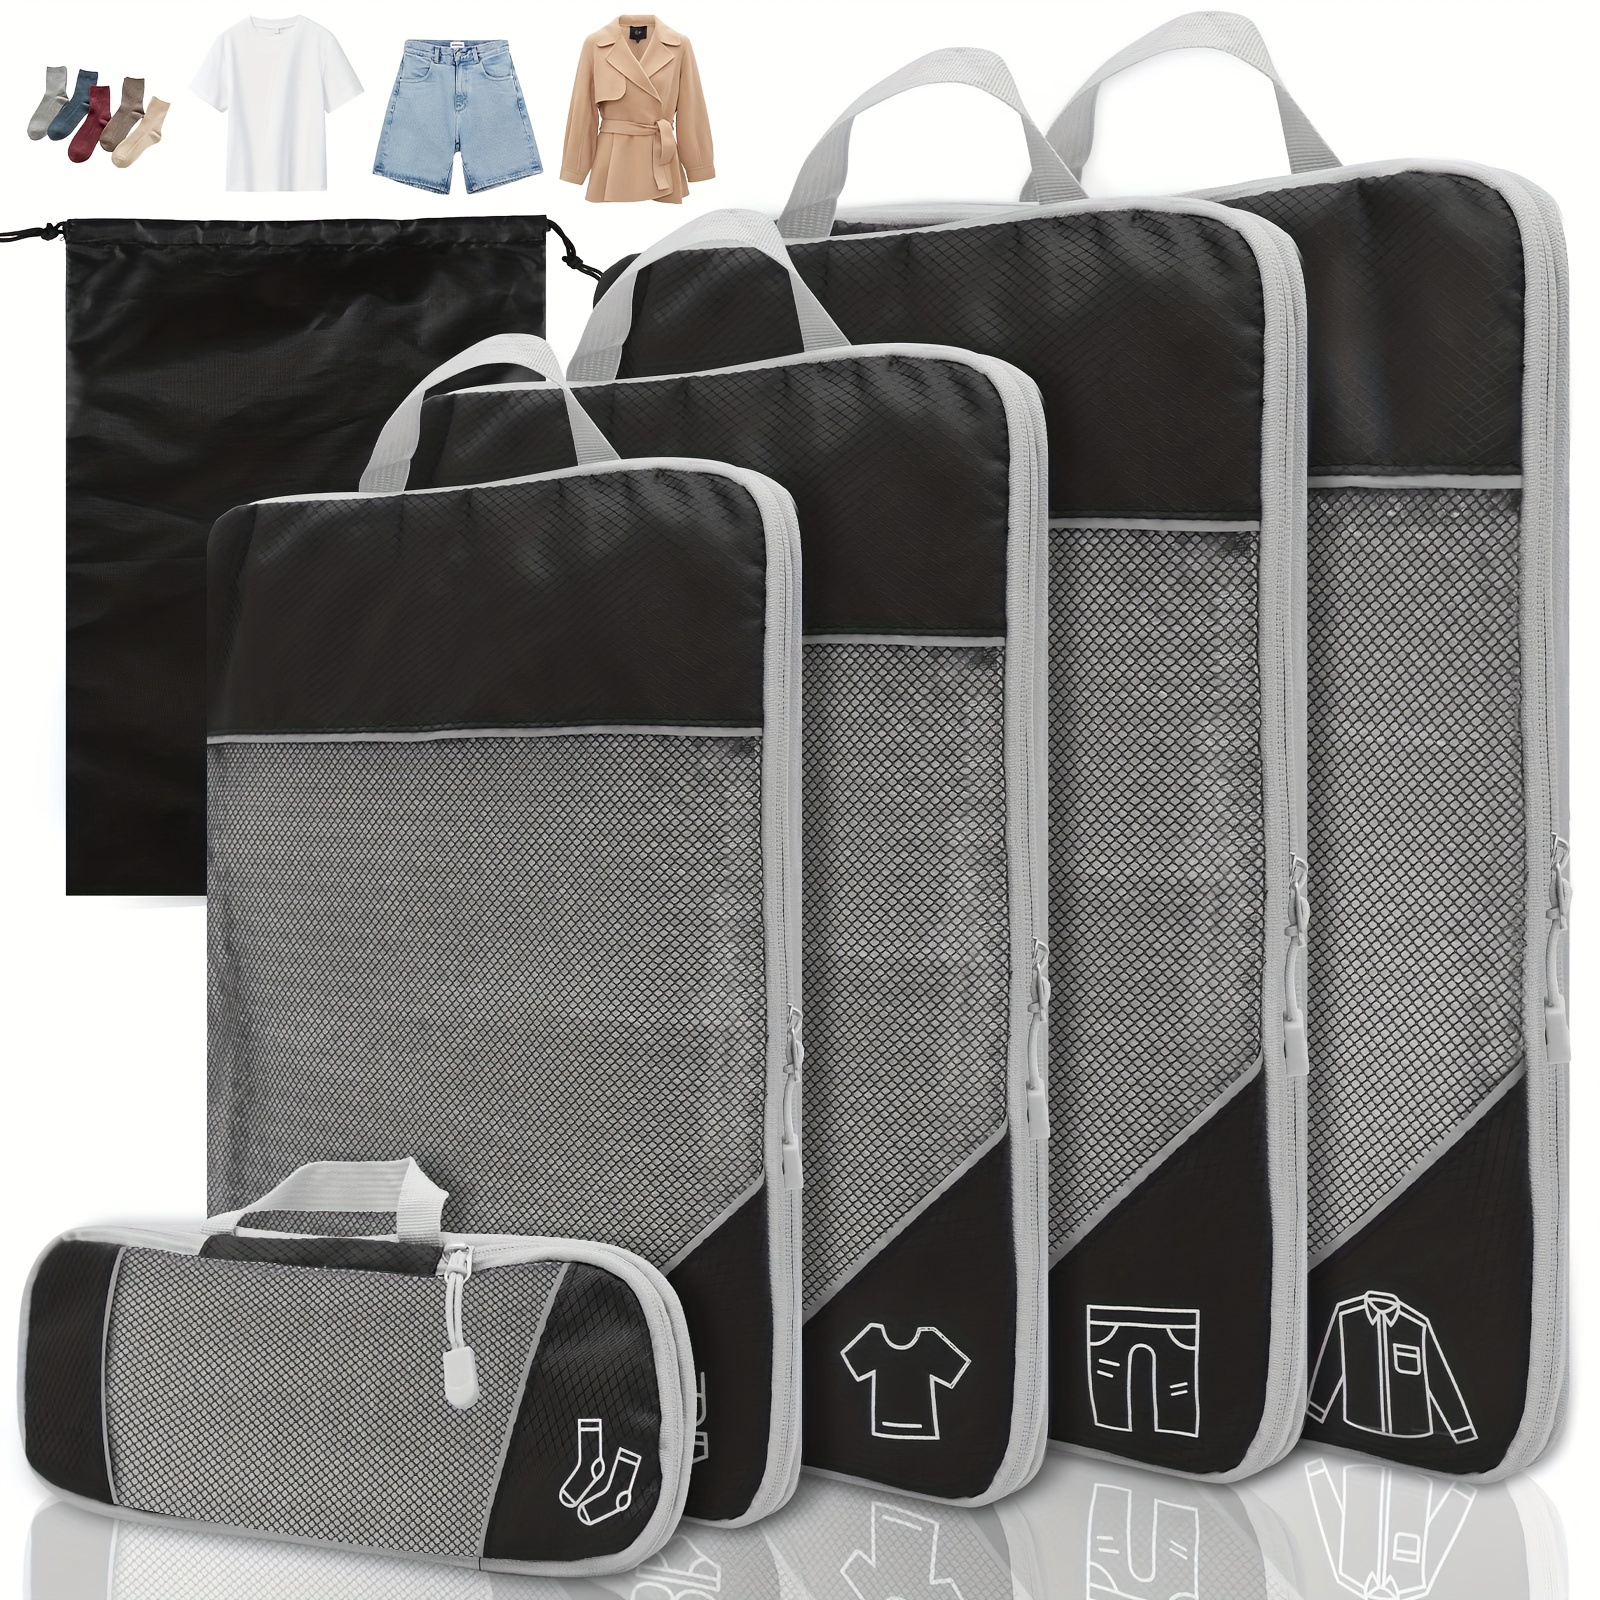 https://img.kwcdn.com/product/nylon-luggage-suitcase-organizer-bags/d69d2f15w98k18-1355a1f0/Fancyalgo/VirtualModelMatting/0a02e7ceb5c5049d47476e31b9e6552f.jpg